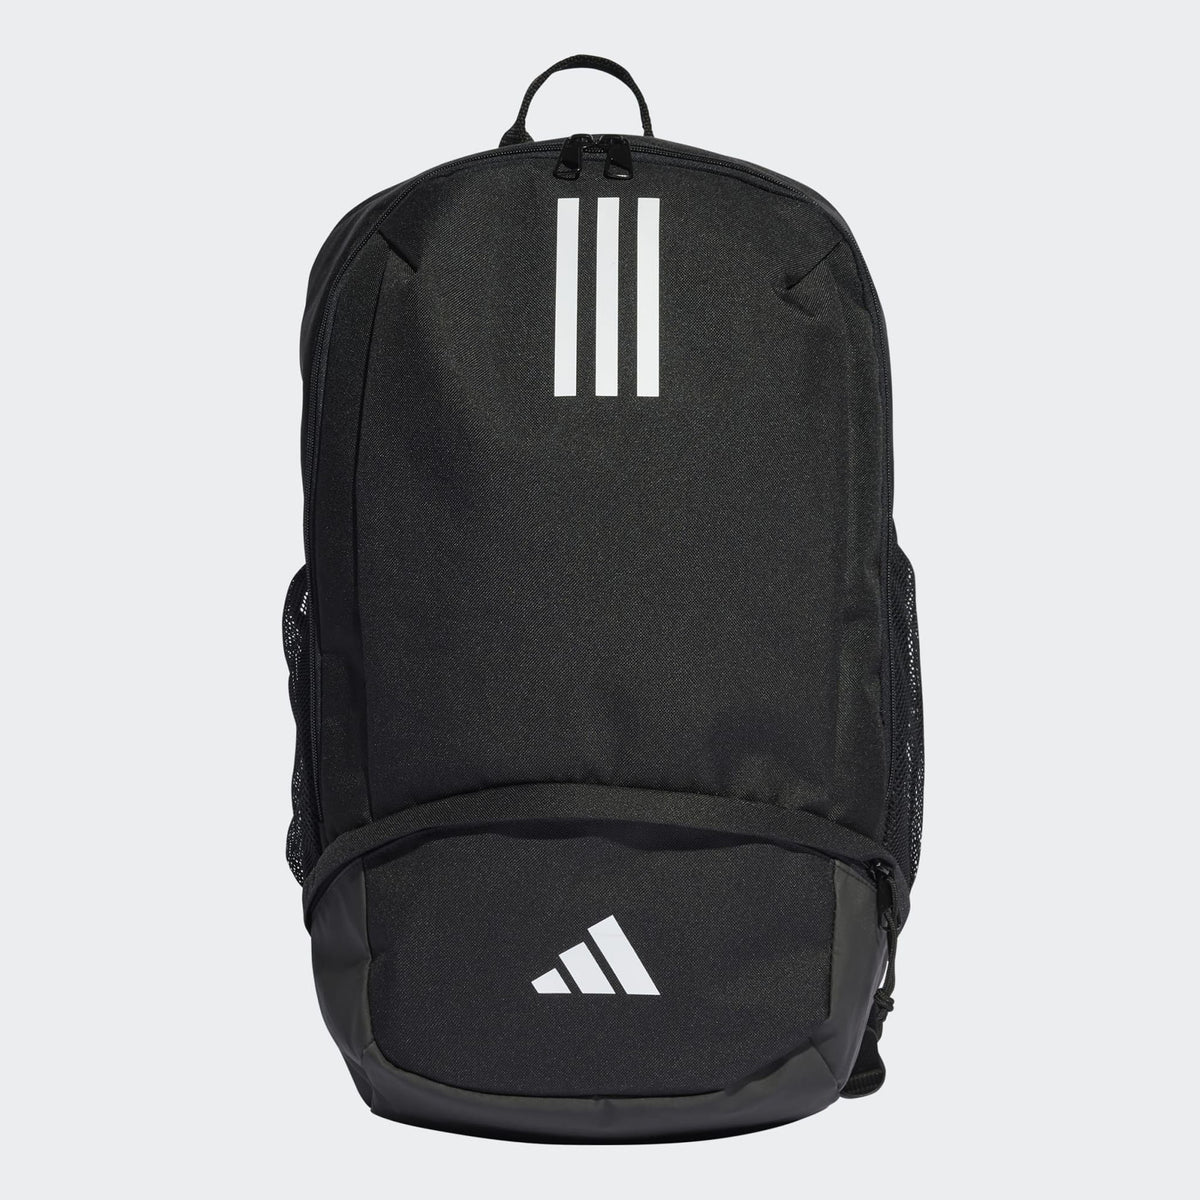 Adidas Tiro L Backpack: Black